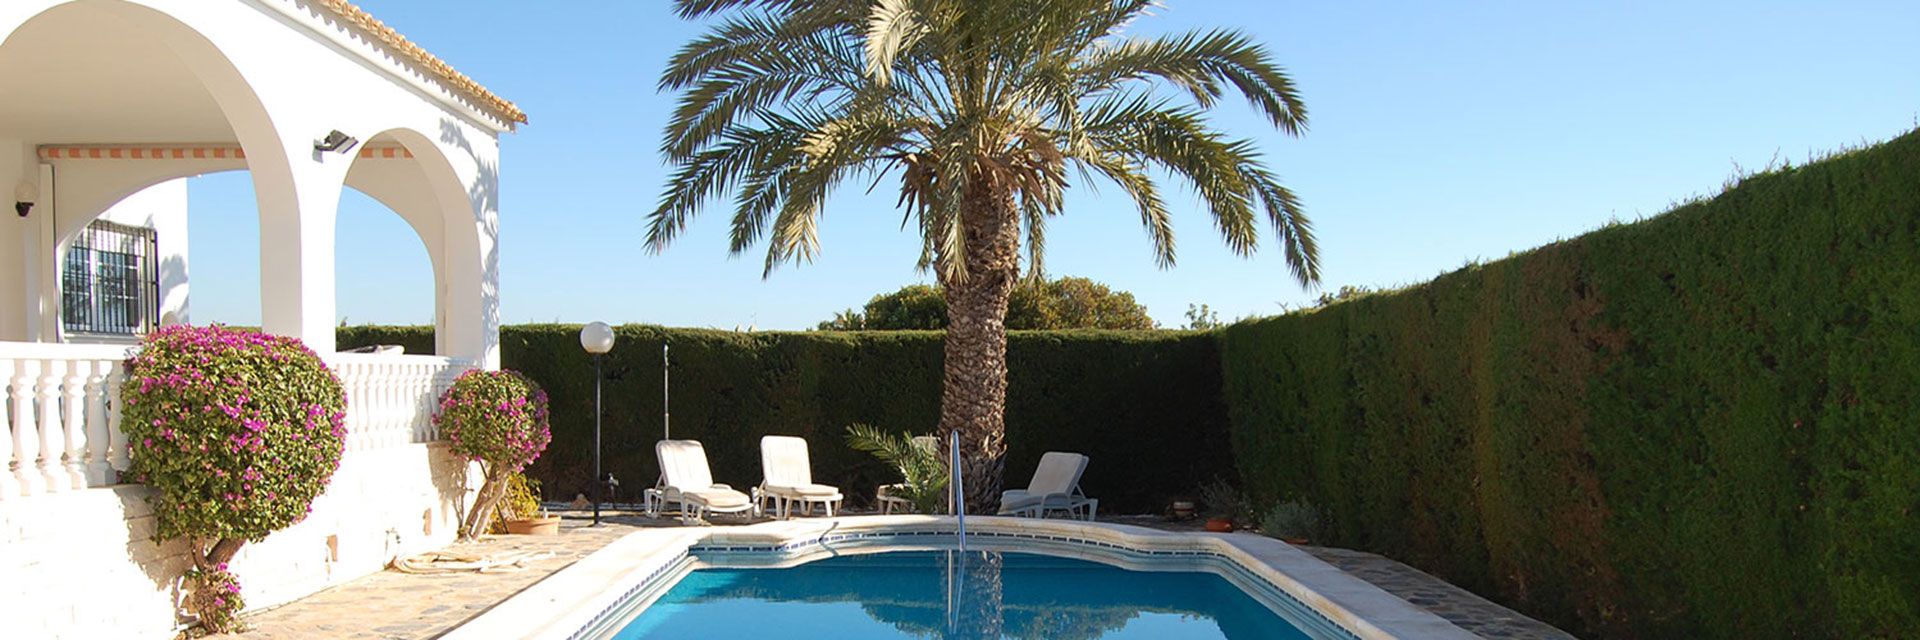 in the sun holidays banner 1 villa pool